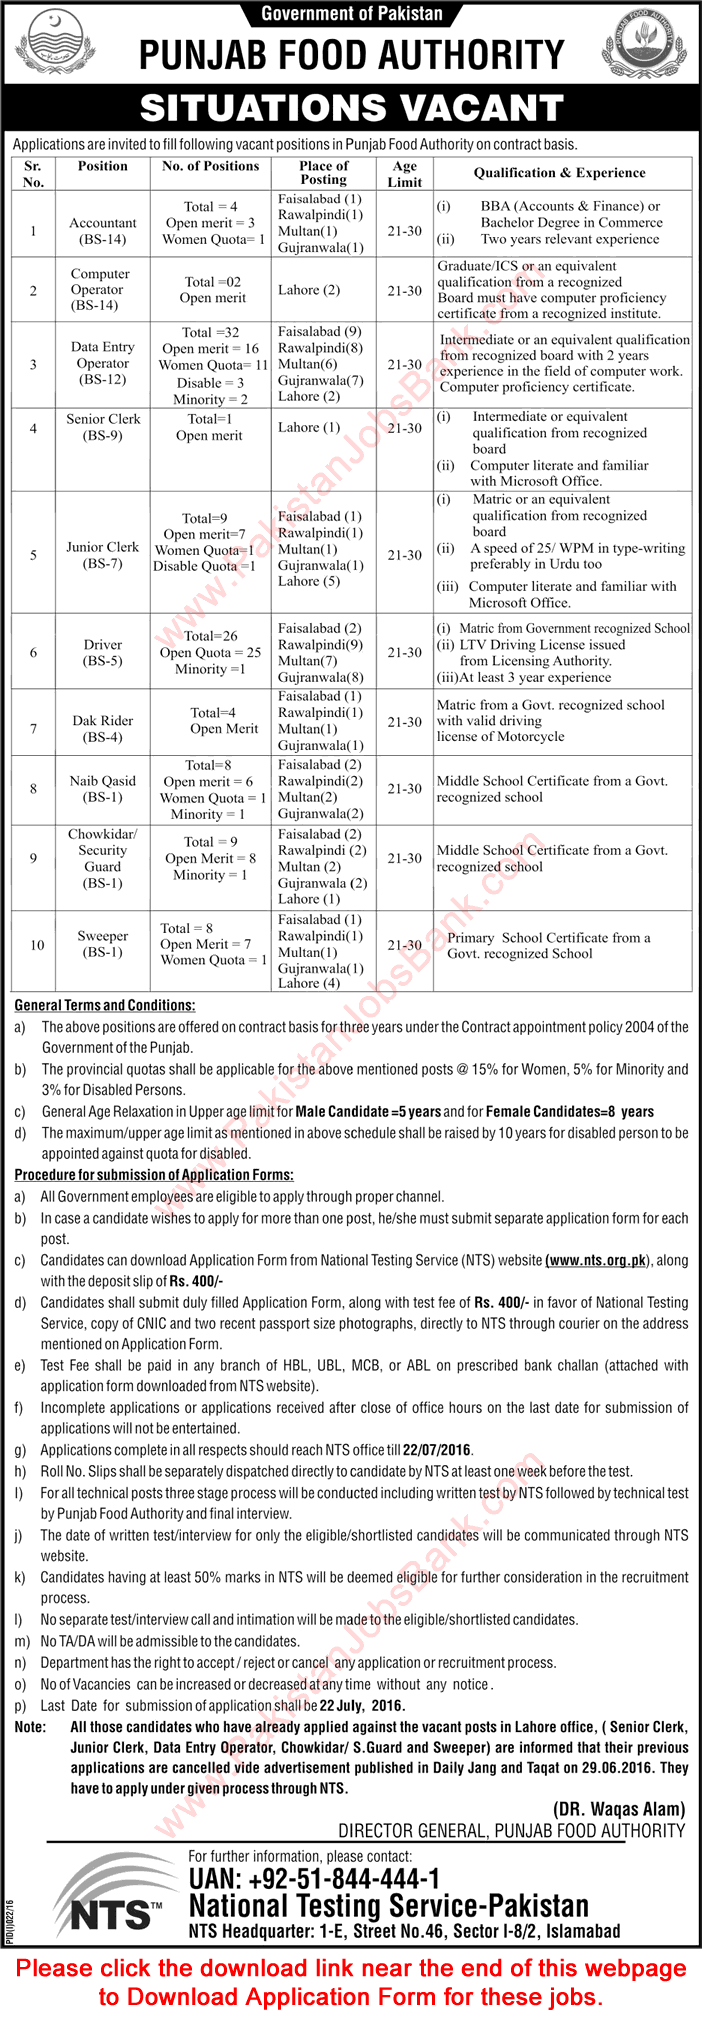 Punjab Food Authority Jobs July 2016 NTS Application Form Data Entry Operators, Naib Qasid, Drivers & Others Latest